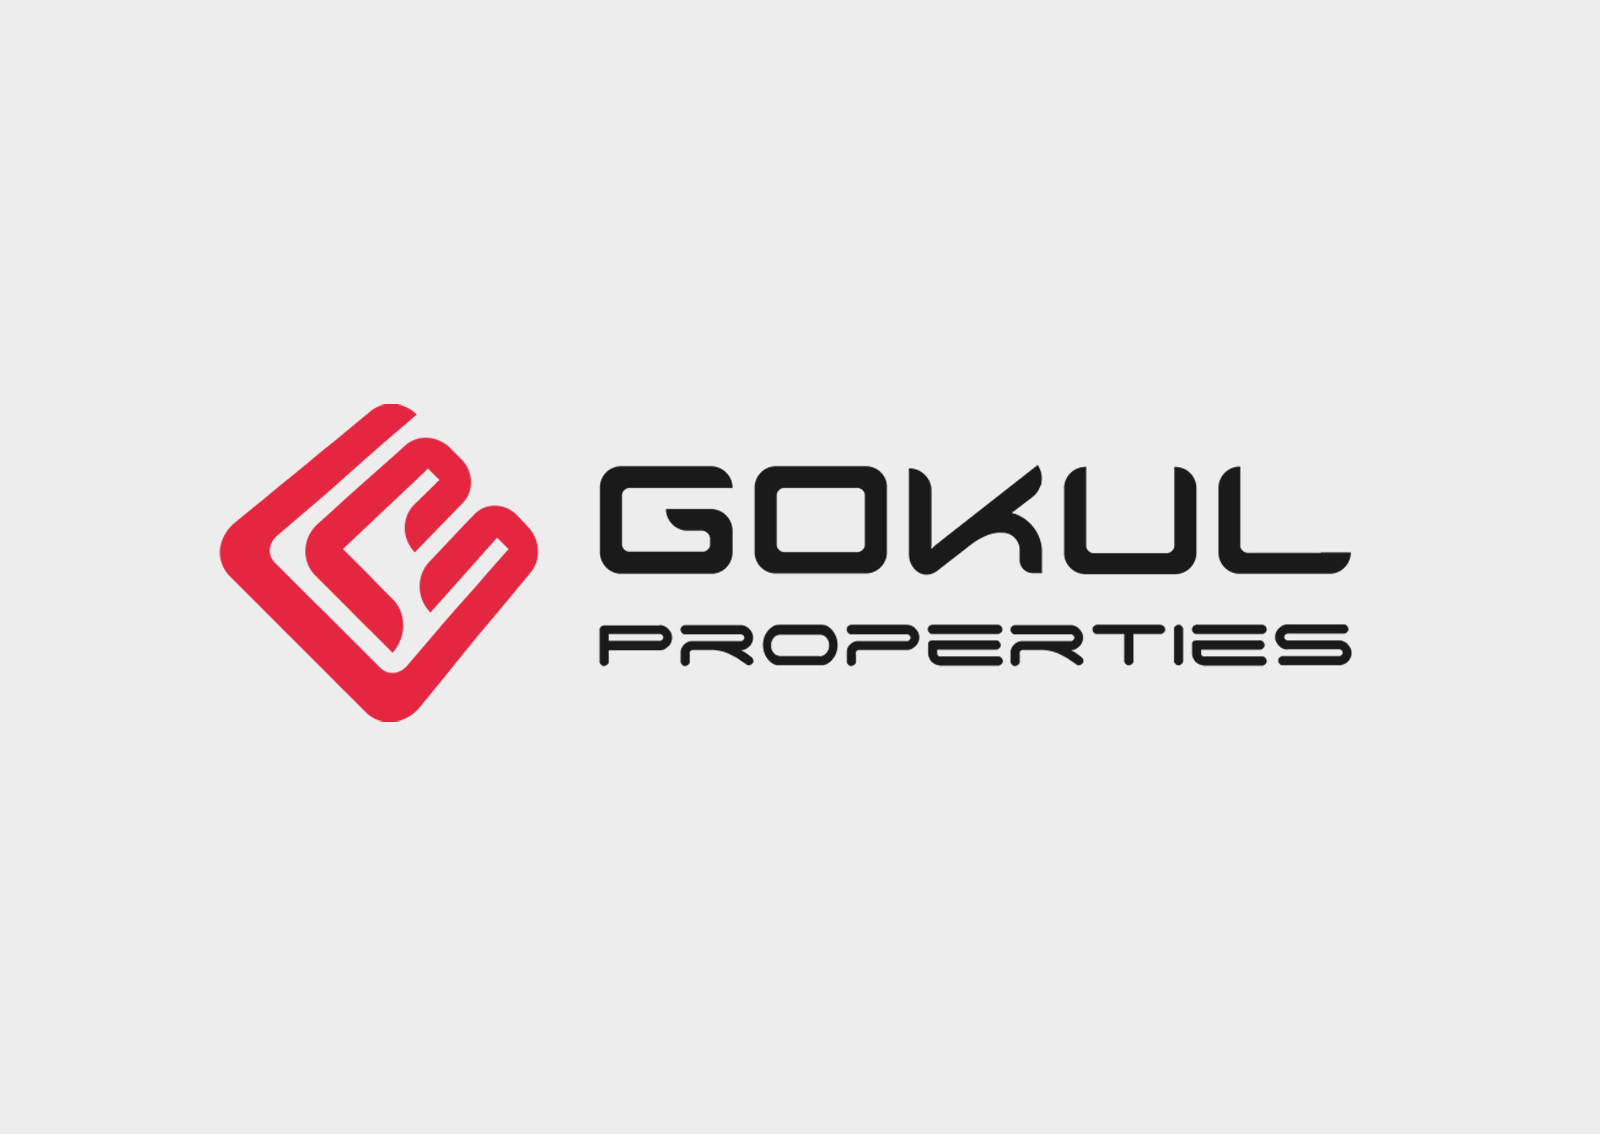 Gokul-Properties.png